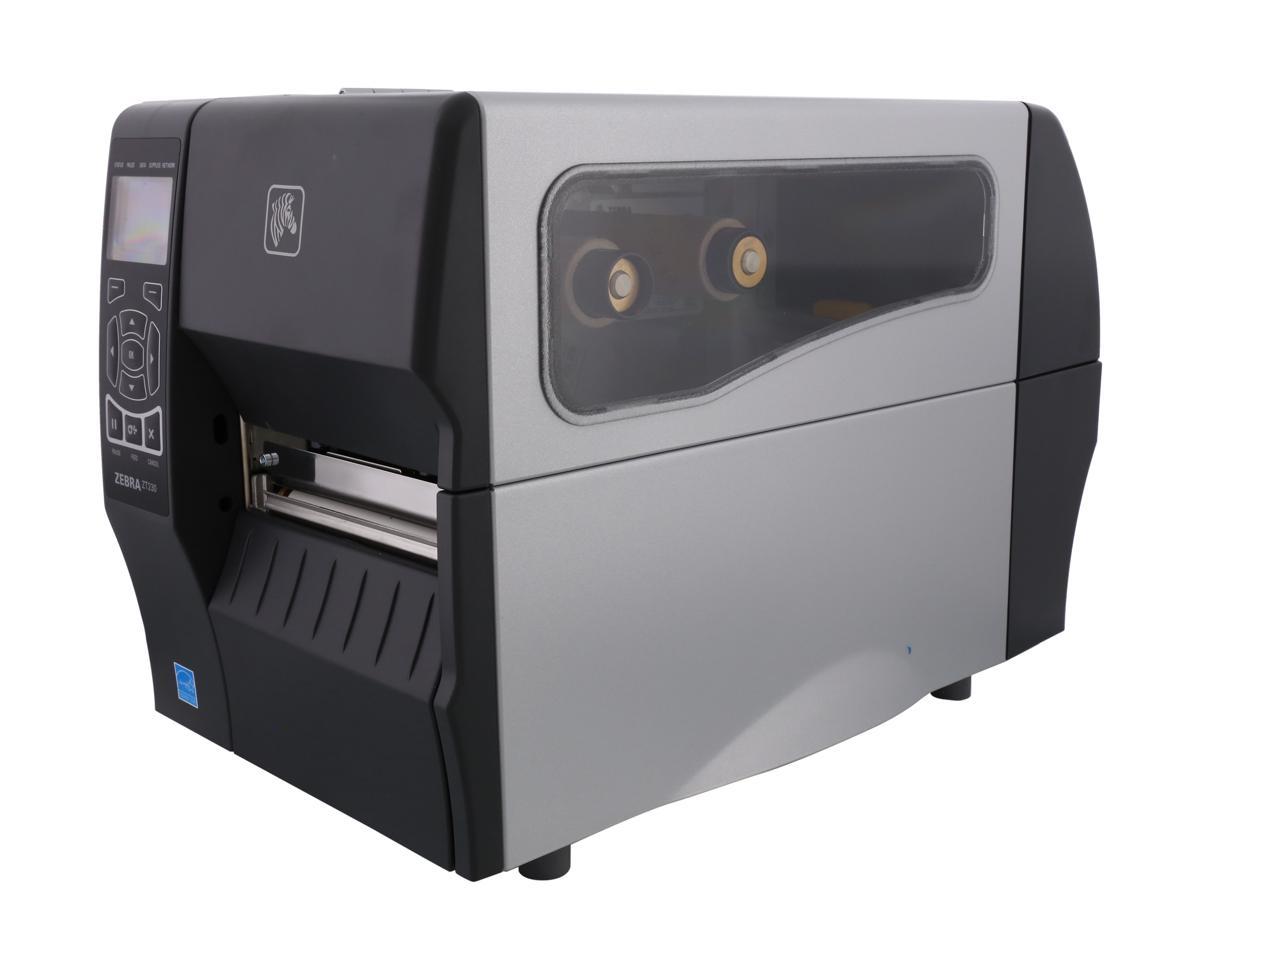 Zebra ZT230 4” Industrial Thermal Transfer Label Printer, LCD, 203 dpi,  Serial, USB, Int 10/100, ZPL, EPL, XML Support, US Cord - ZT23042-T01200FZ